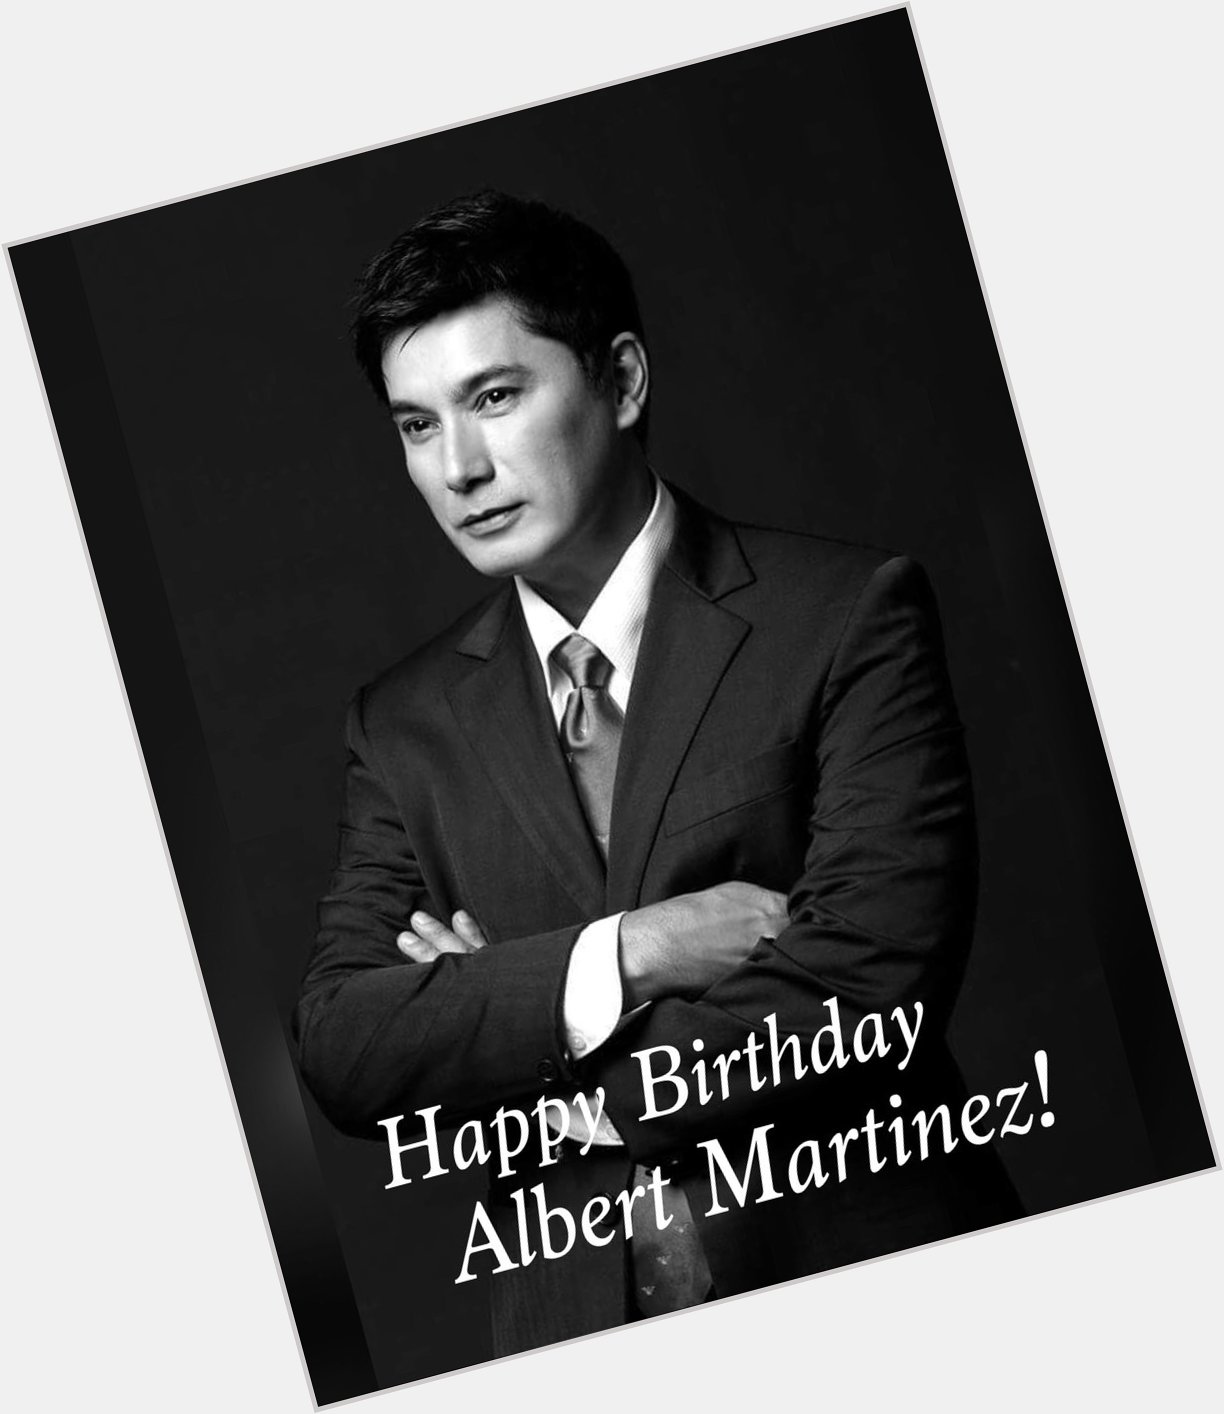 Happy Happy Birthday Albert Martinez!!! 